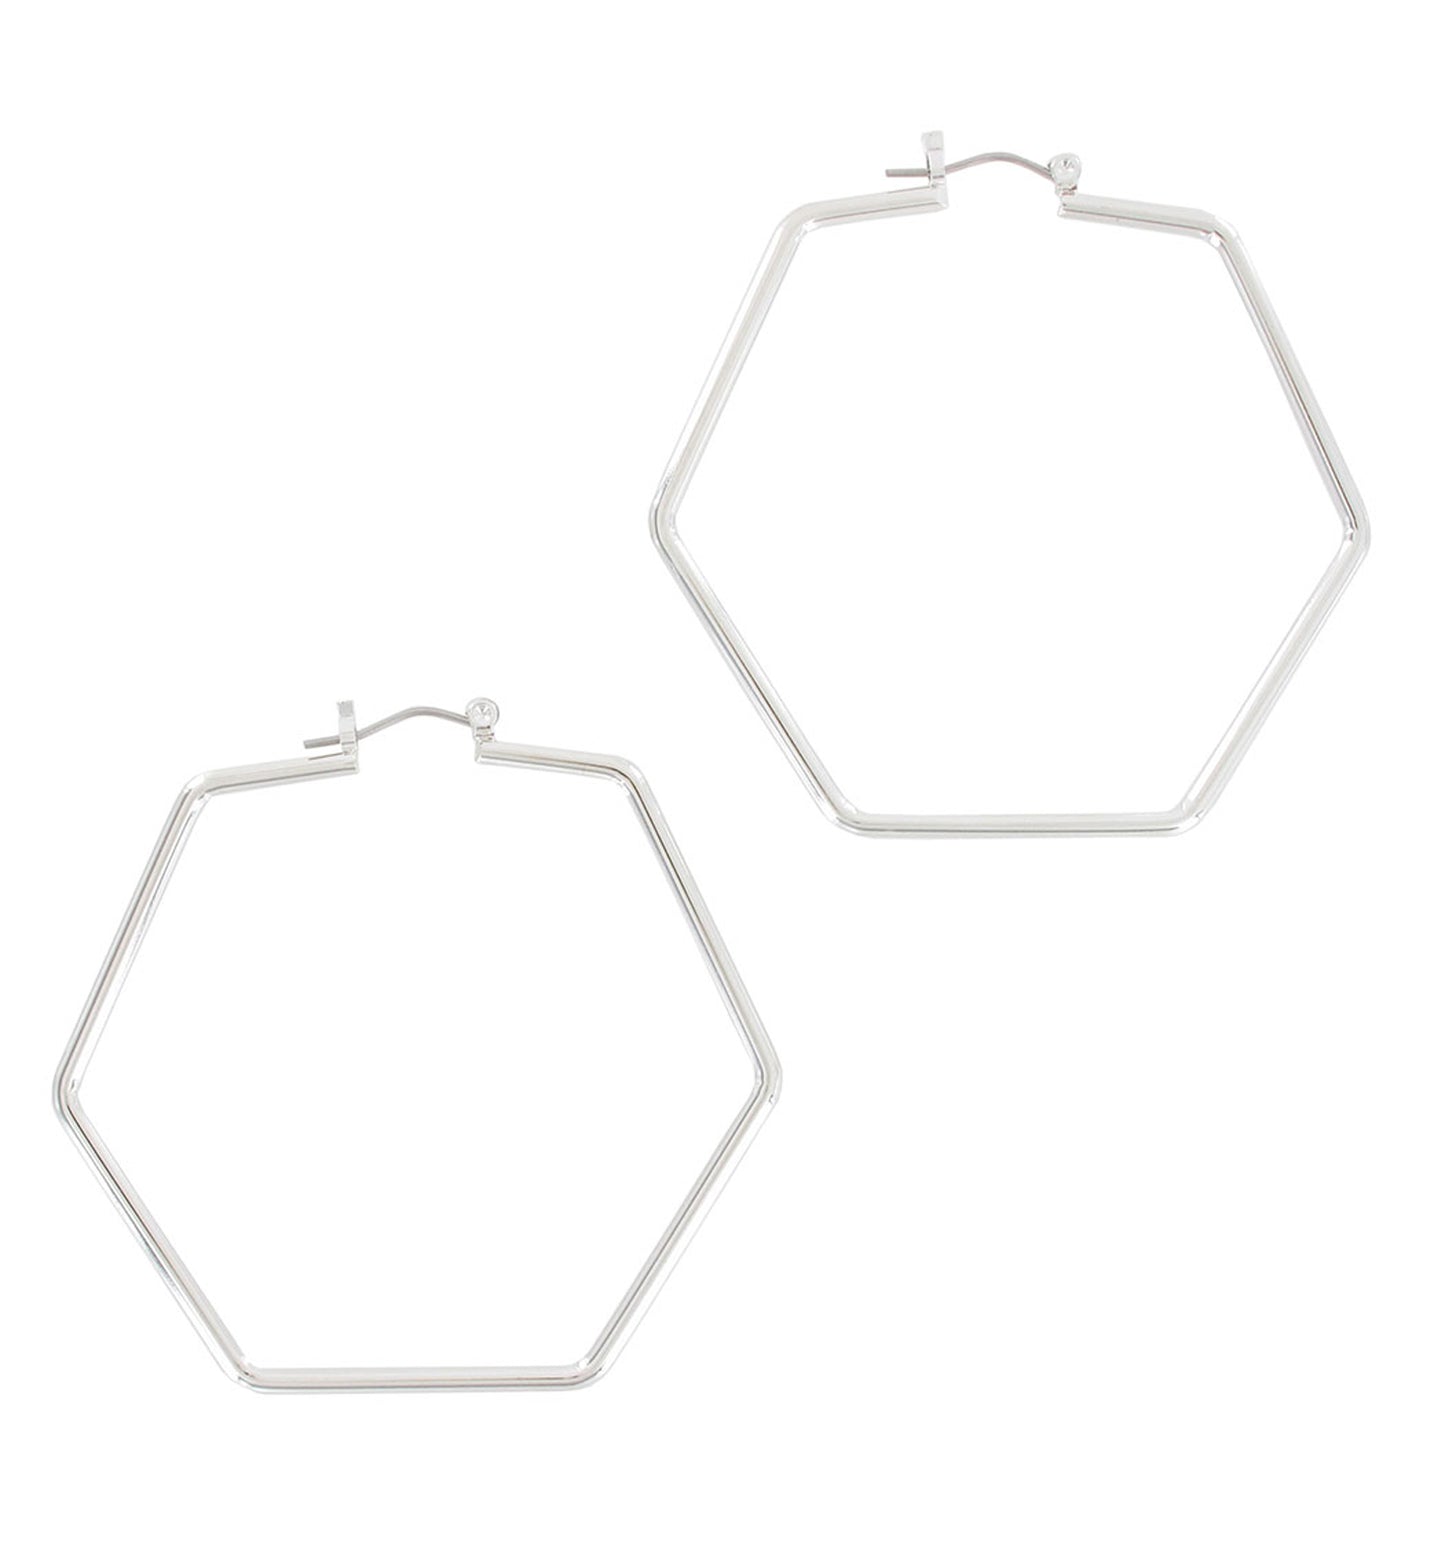 Ky & Co USA Made Silver Tone Geometric Hexagon Hoop Earrings Pierced 2 1/4"